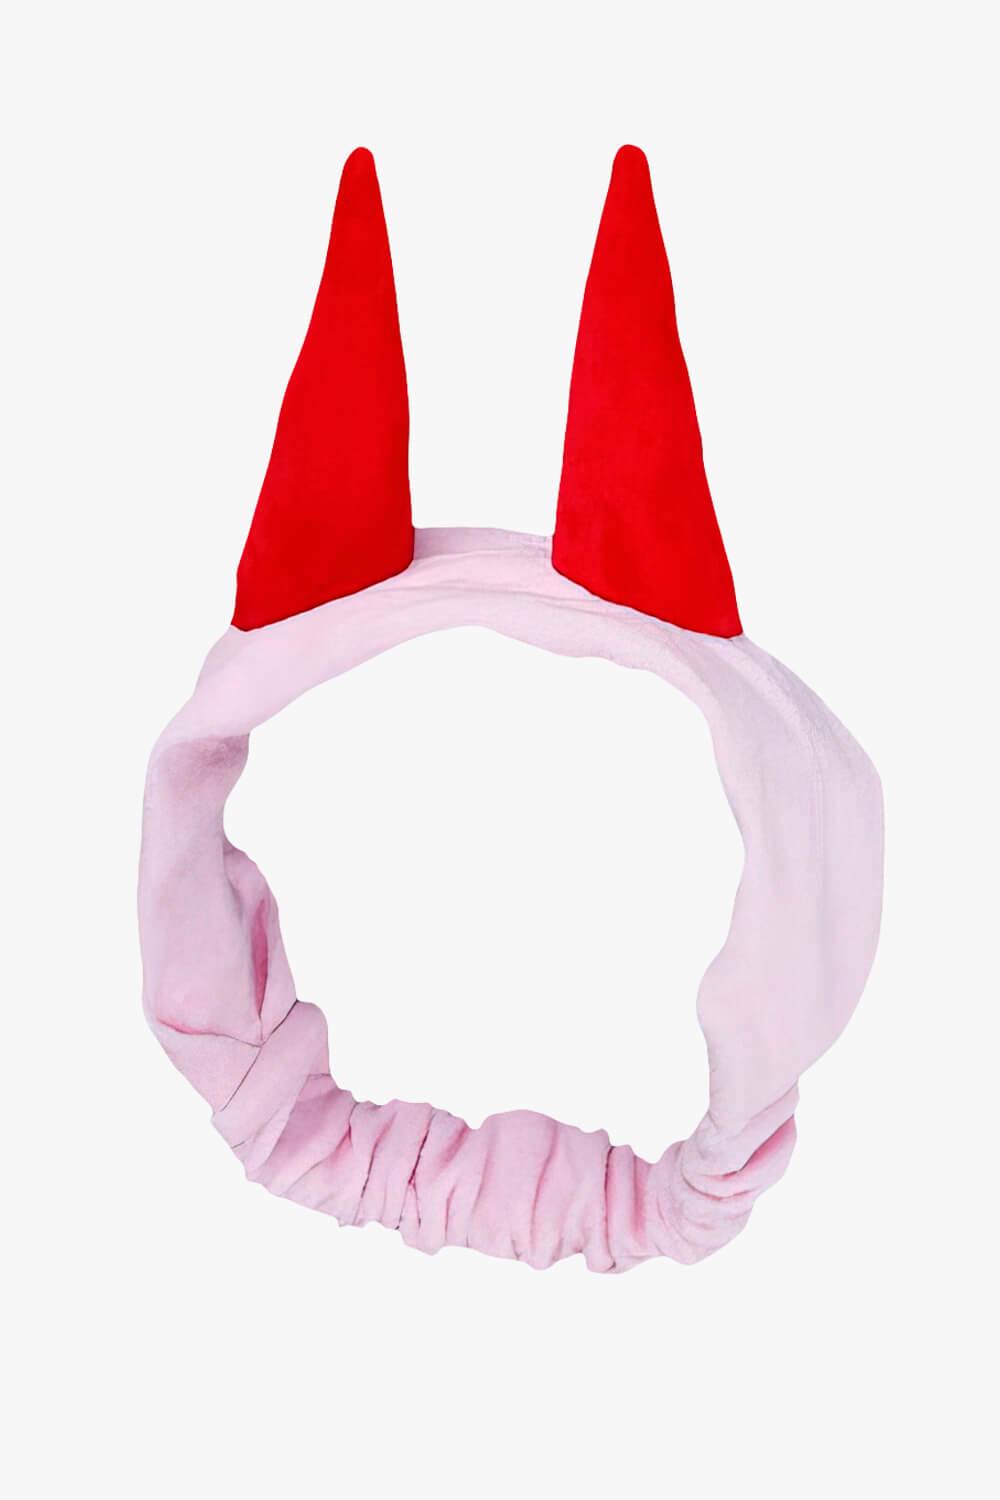 Chainsaw Man Power Red Horns Hair Headband - Aesthetic Clothes Shop